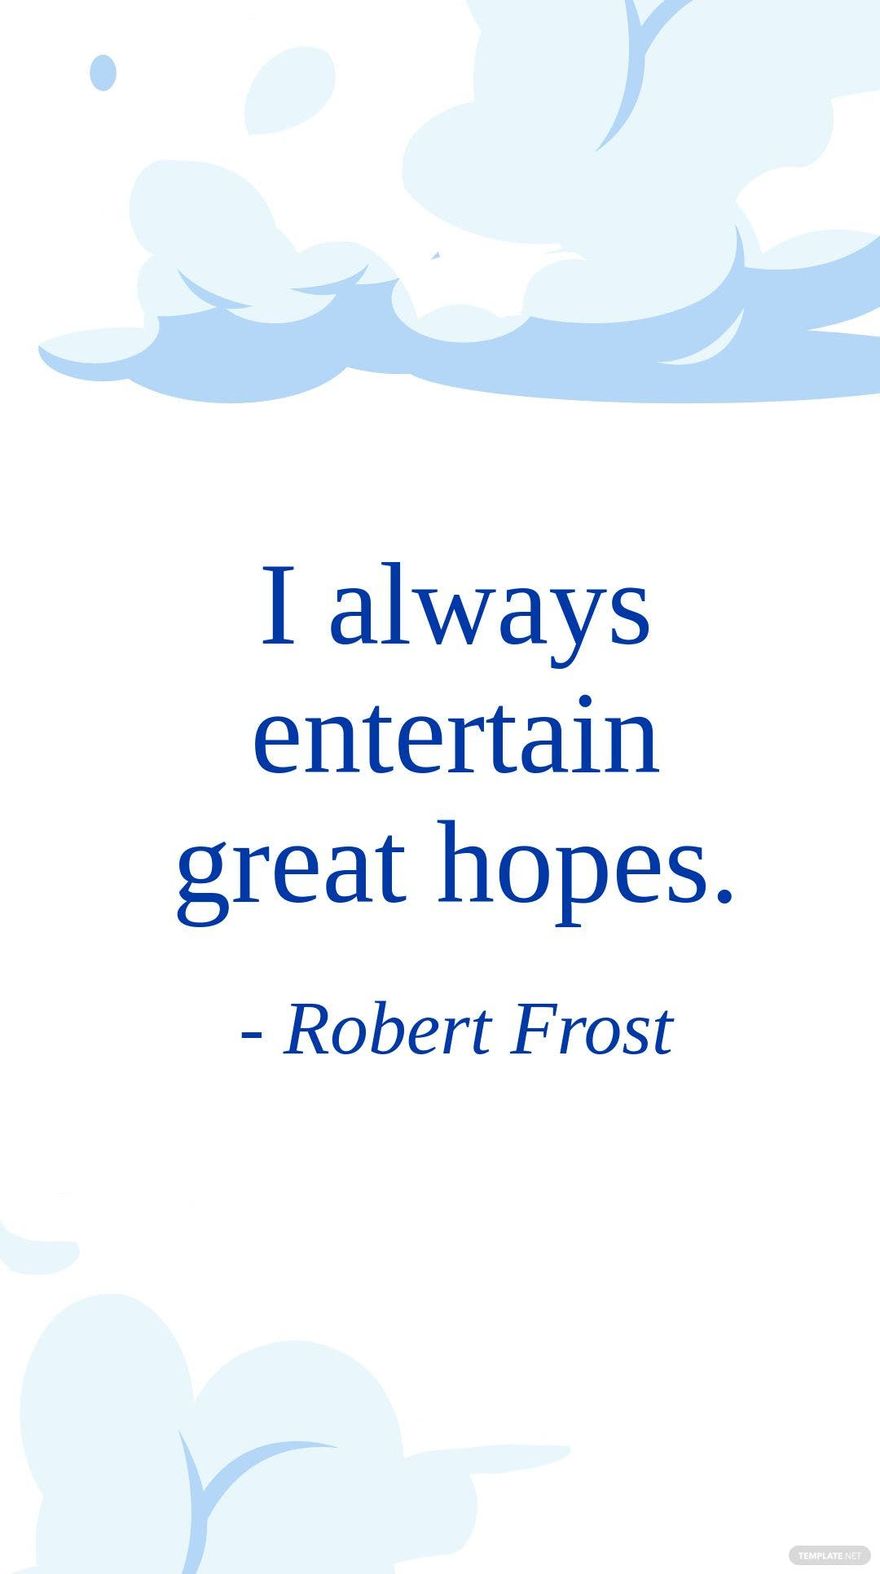 Robert Frost - I always entertain great hopes.